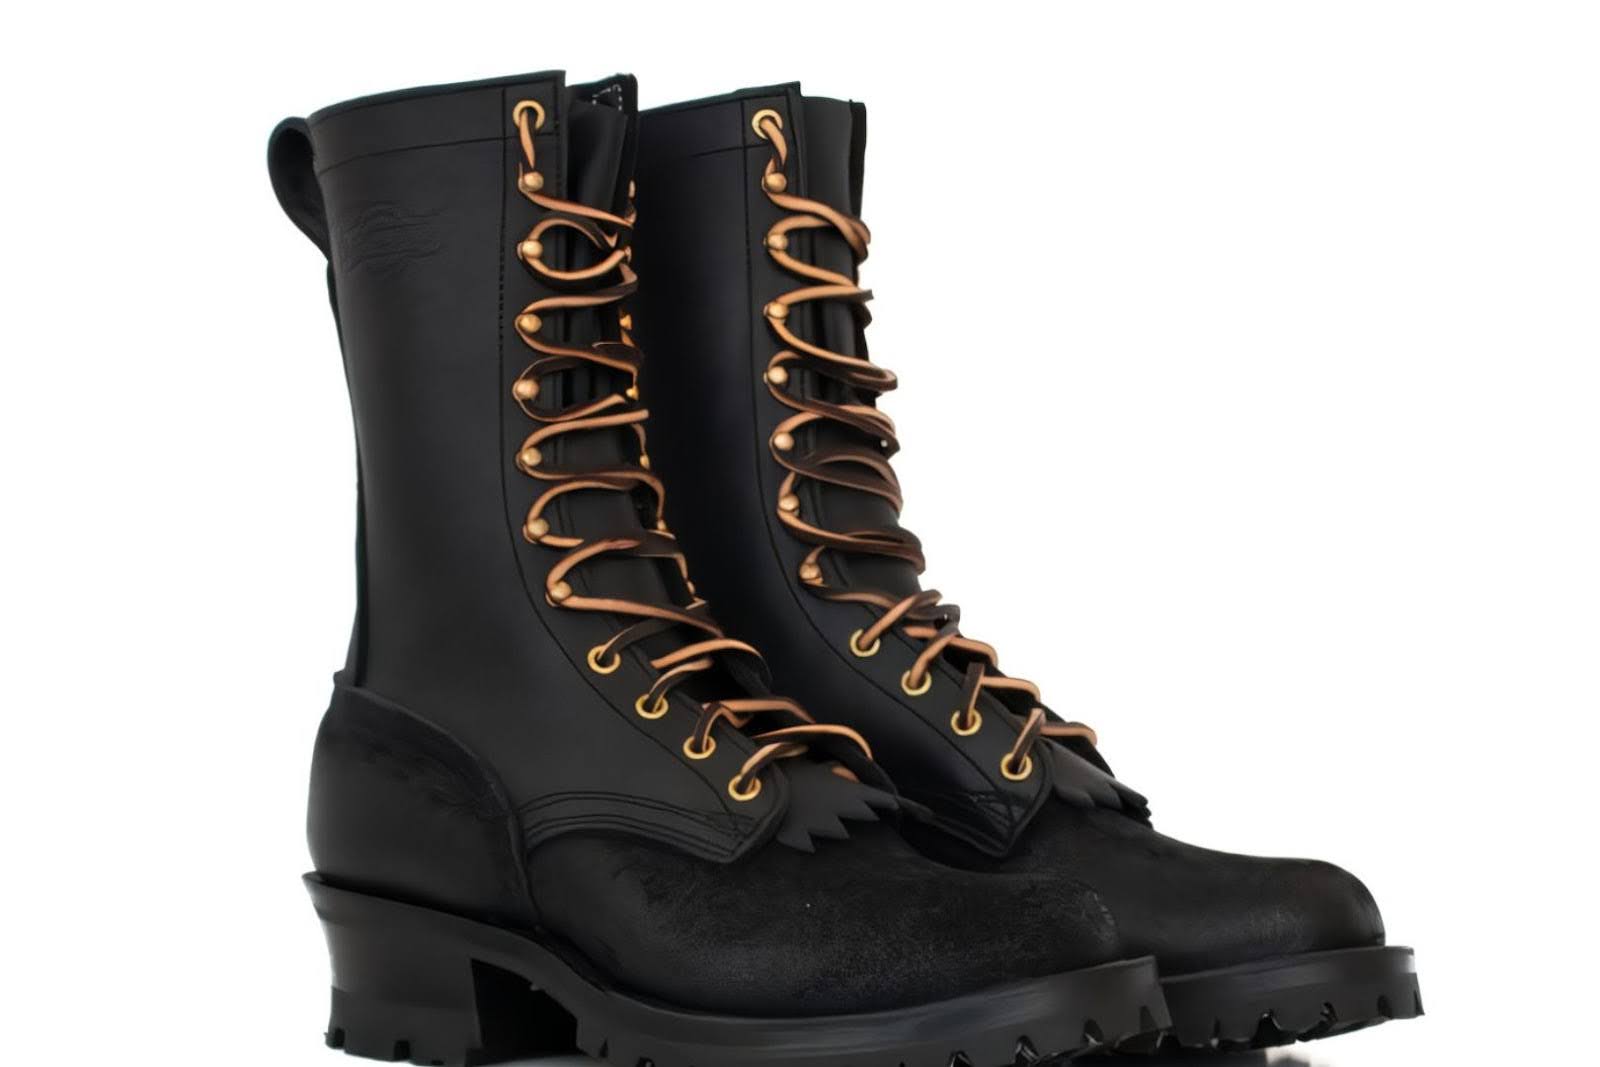 Materials Matter: Leather Welding Boots